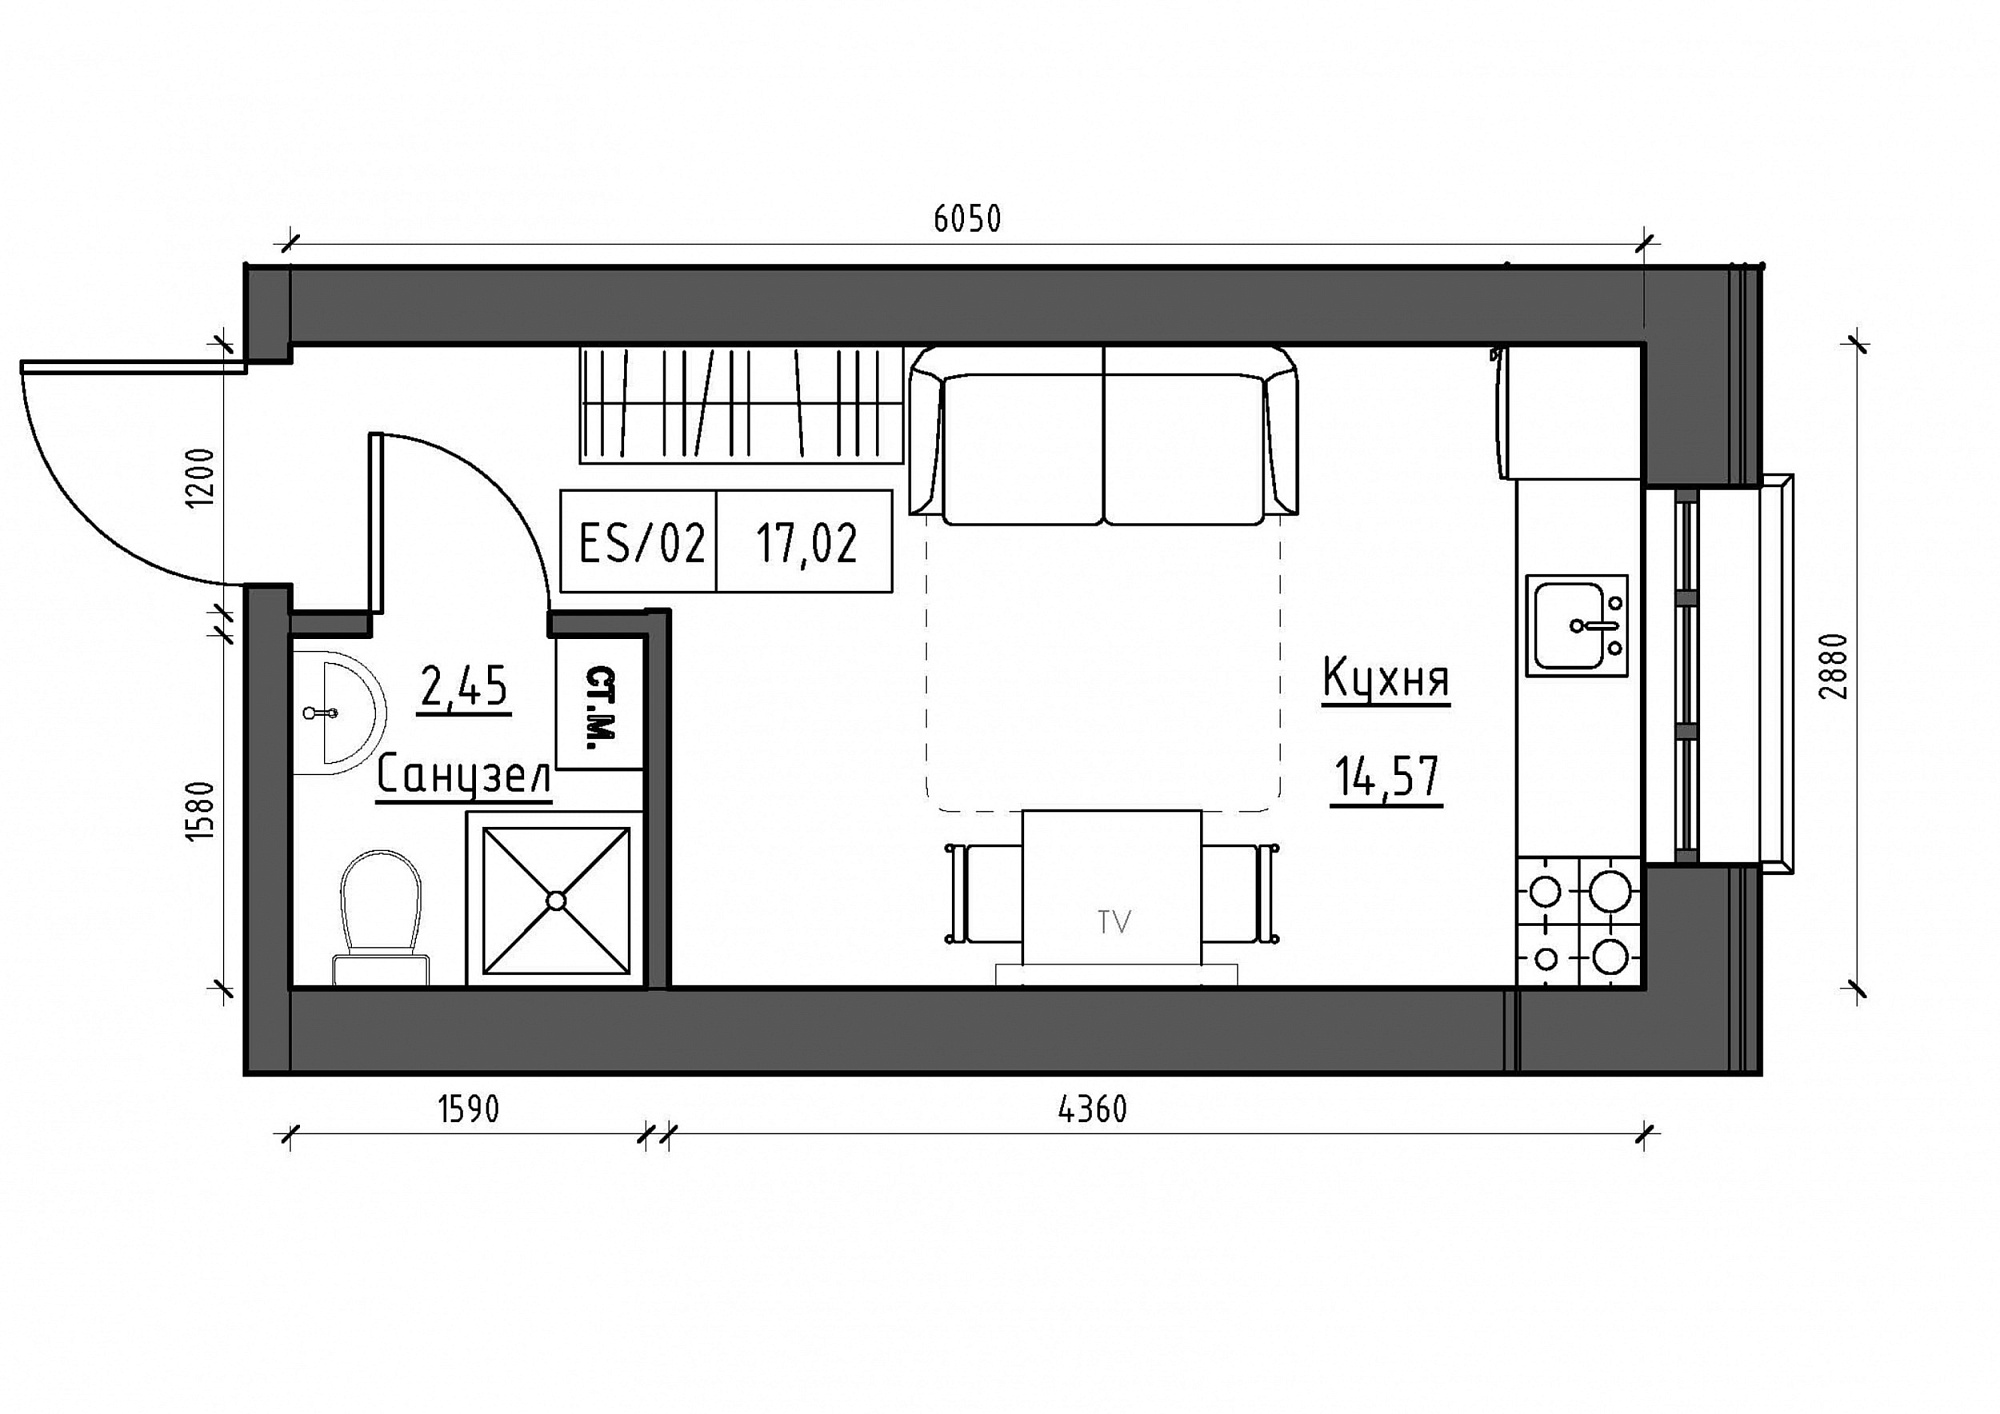 Planning Smart flats area 17.02m2, KS-012-05/0017.